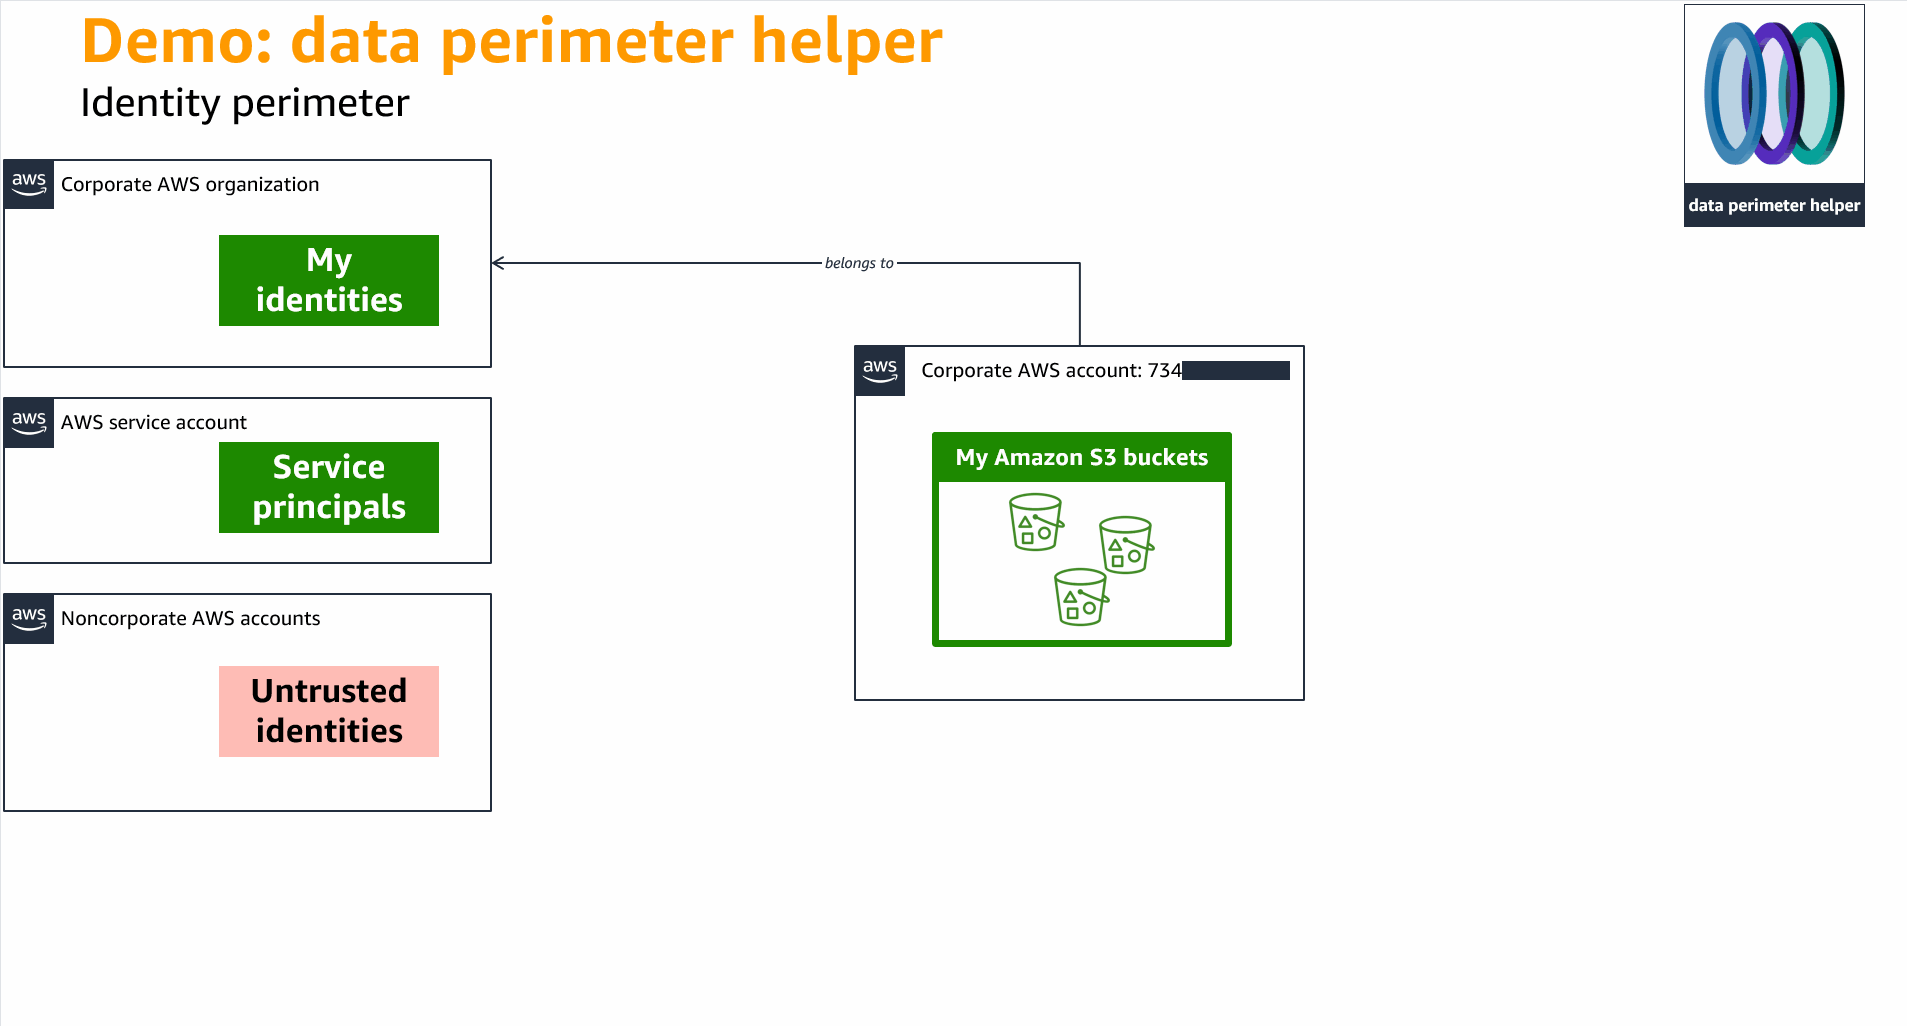 Data perimeter helper - live demo